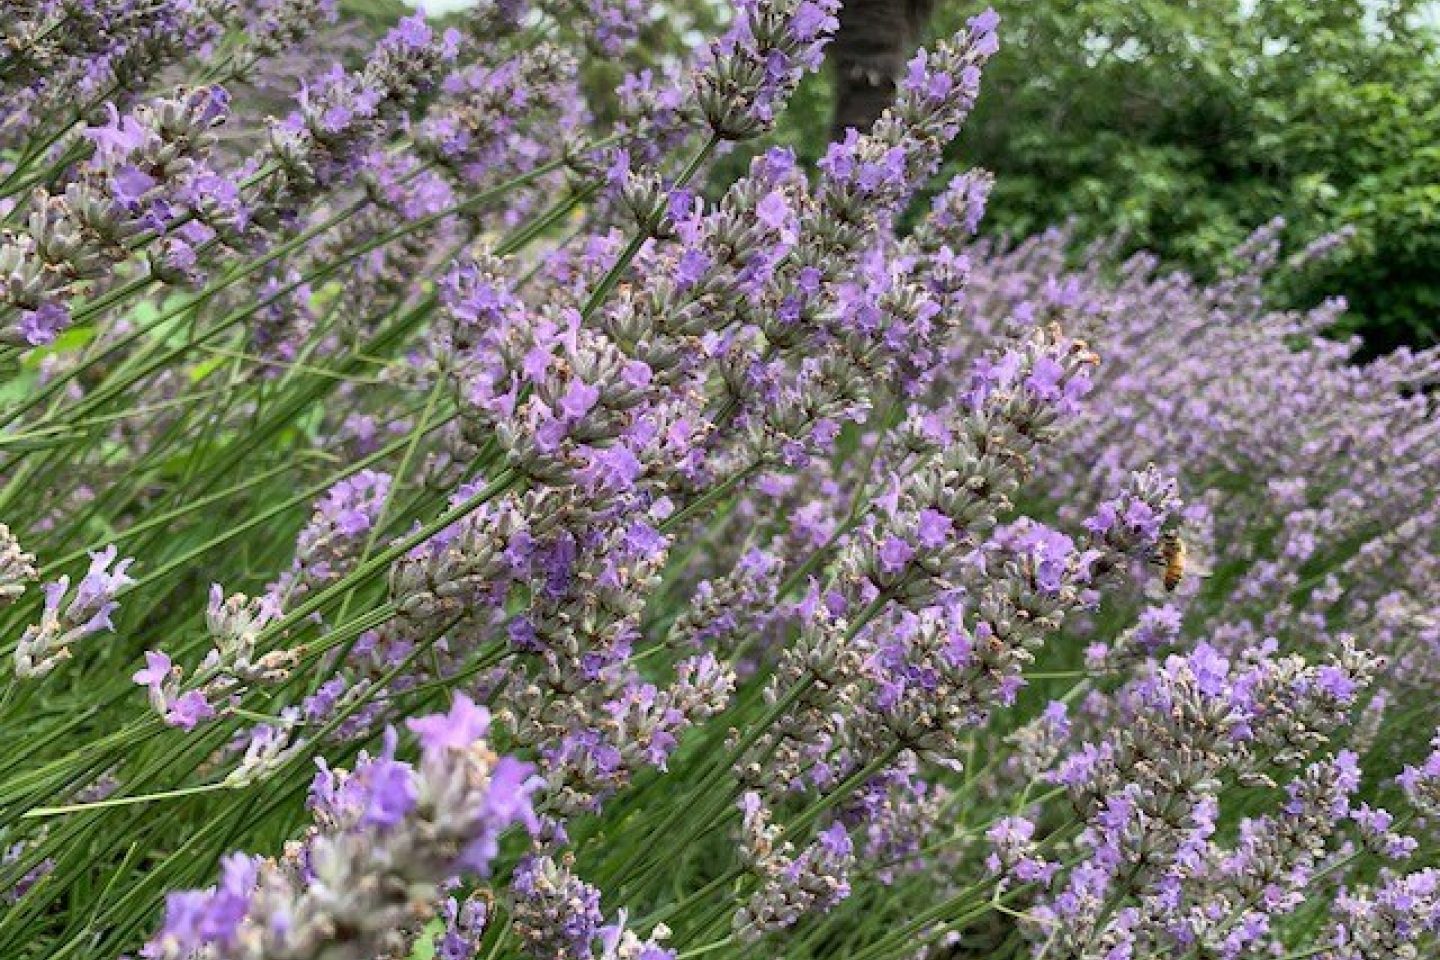 A mass of purple lavender